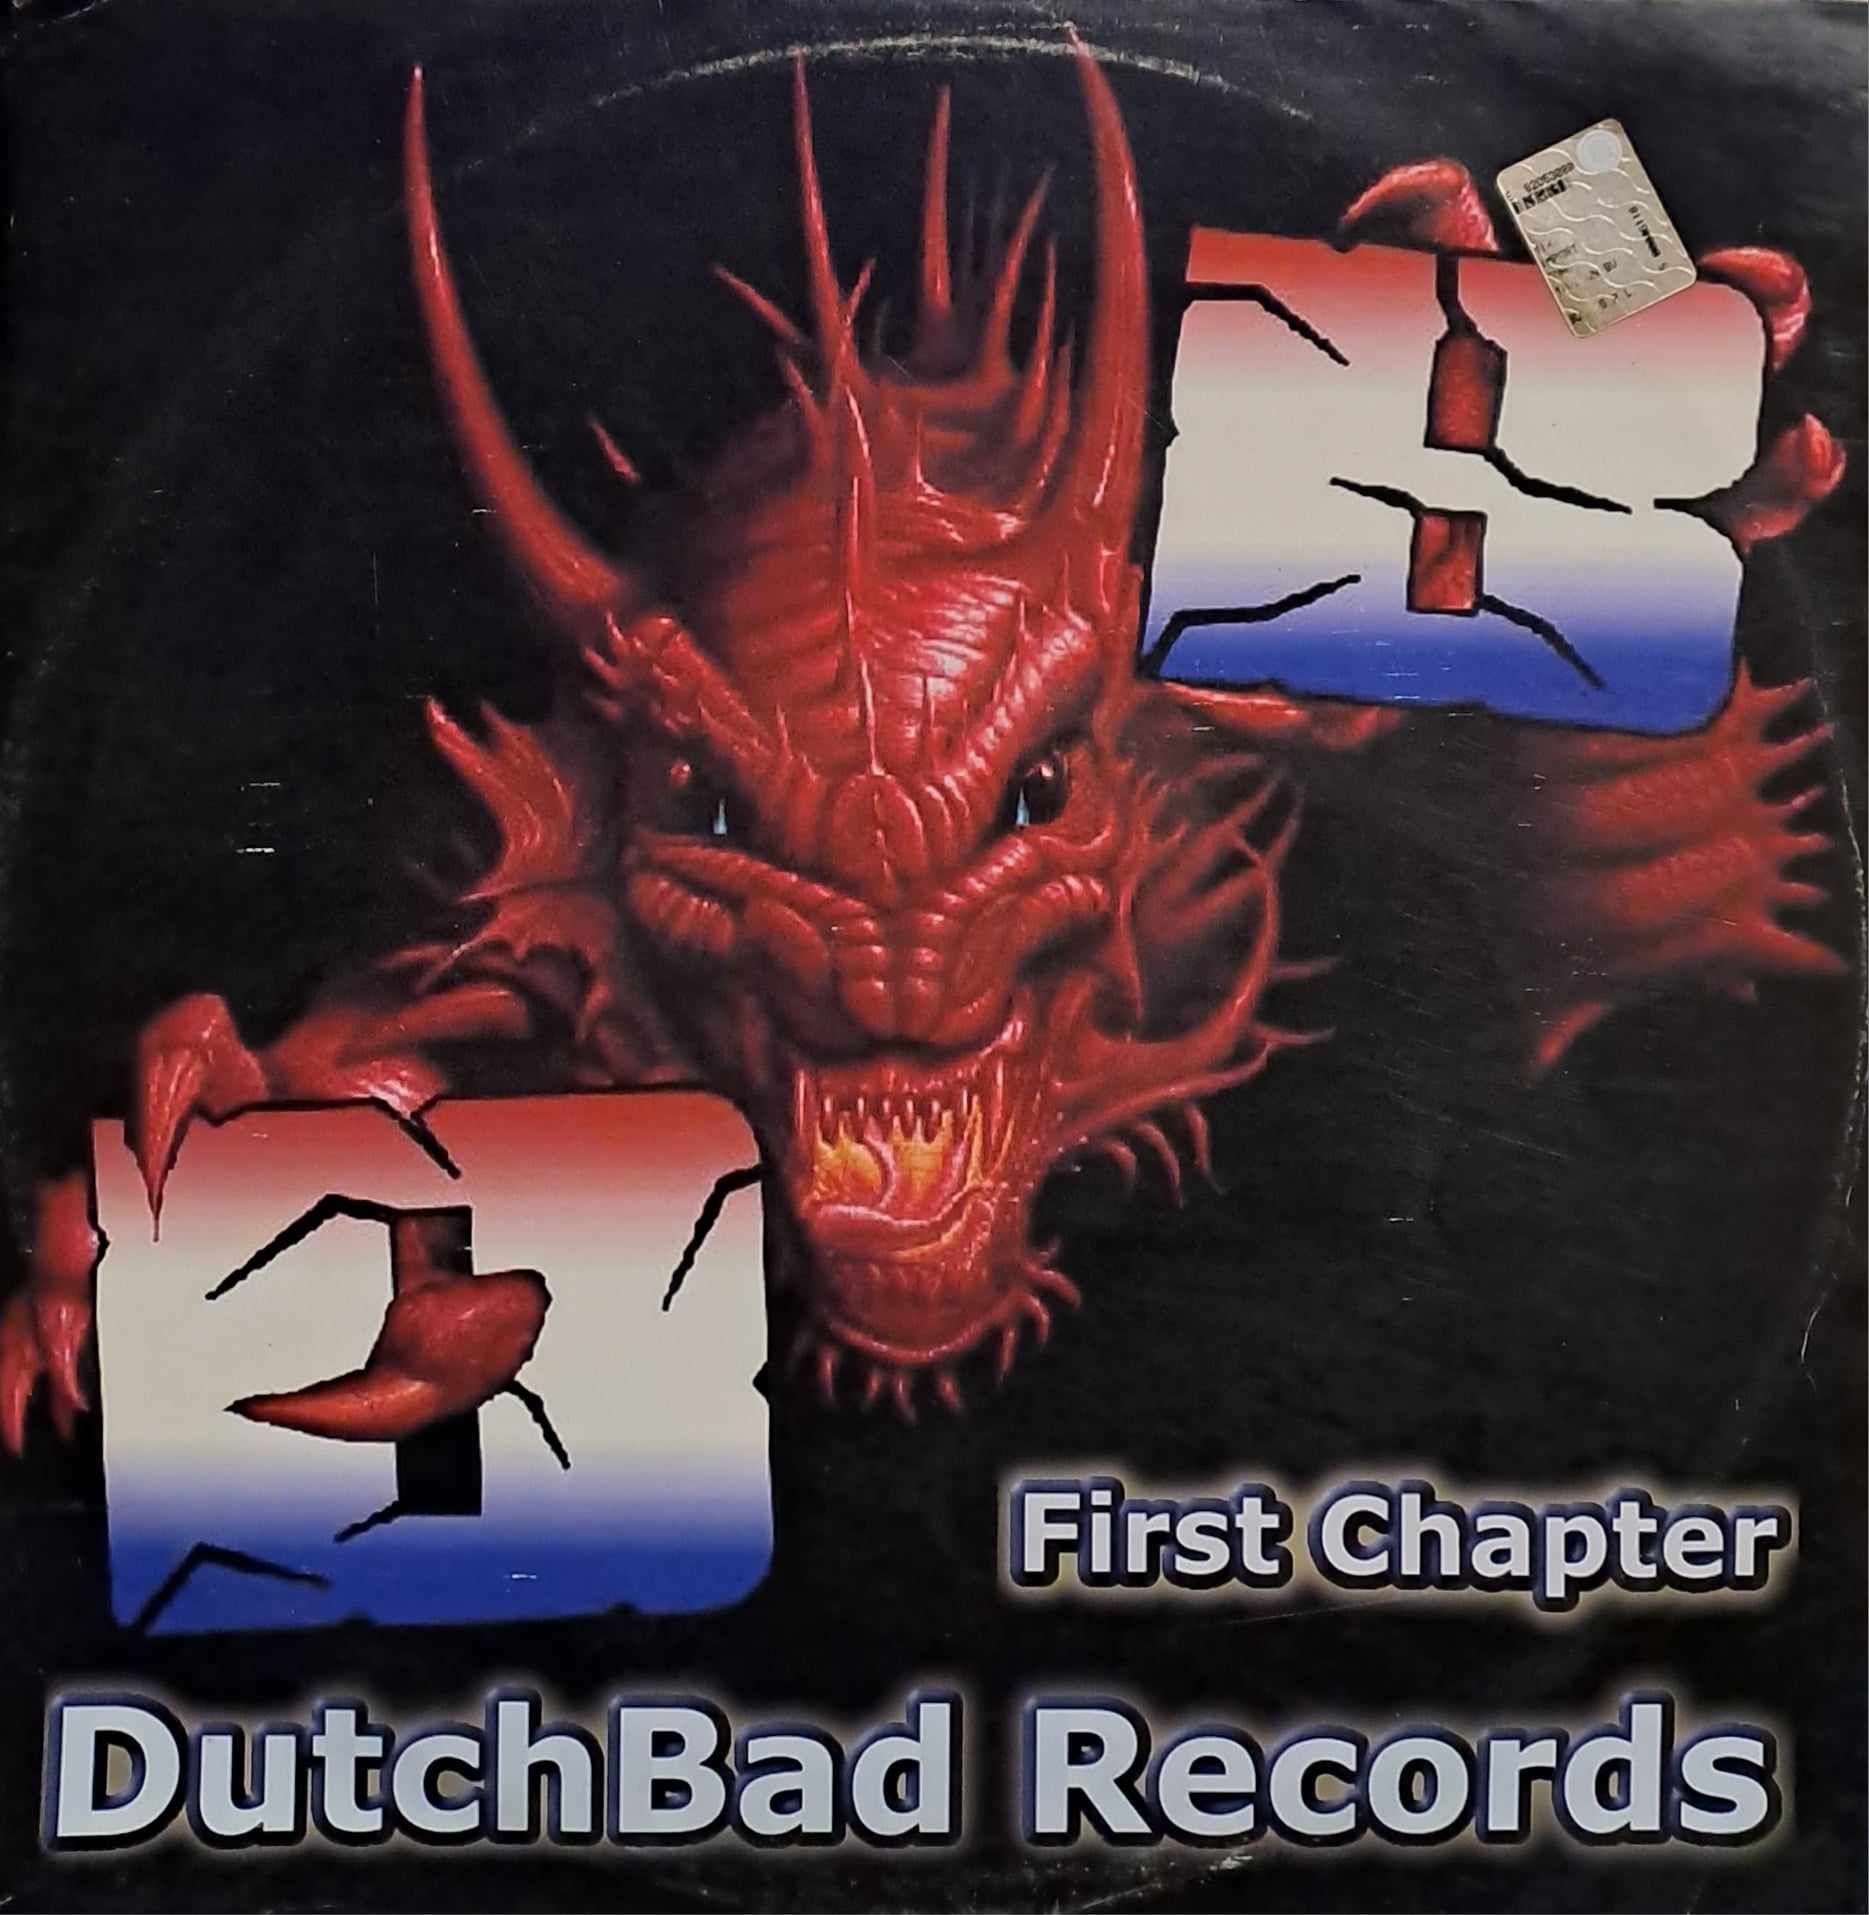 Dutchbad Records 001 - vinyle gabber